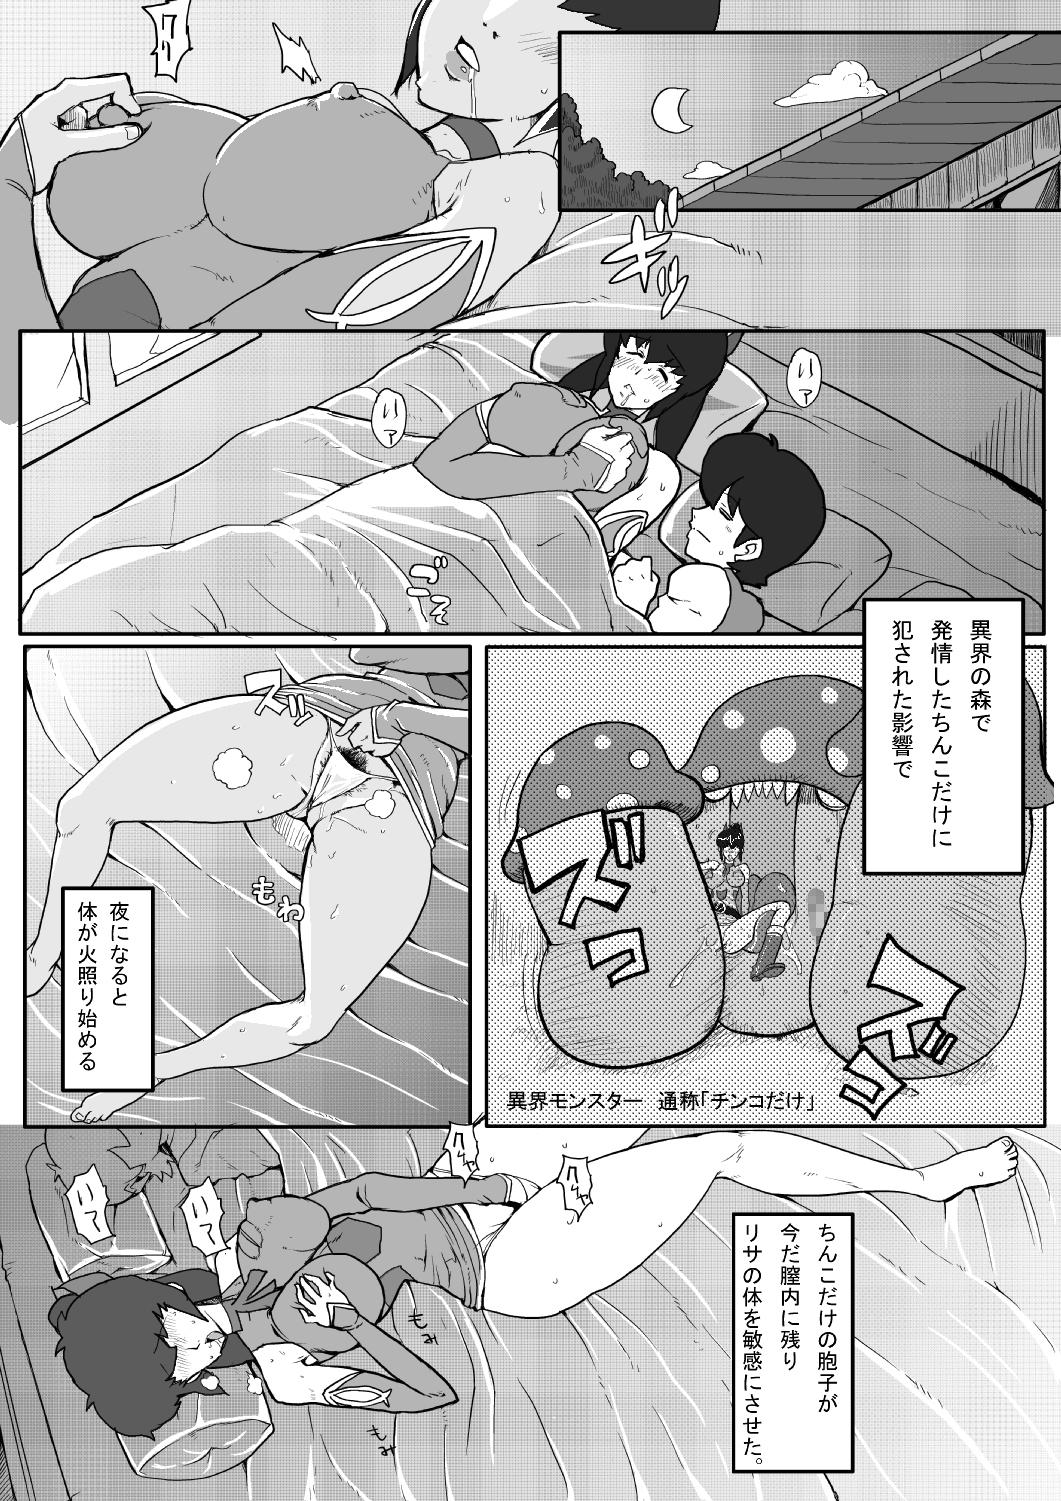 B-kyuu Manga Lisa Final 2 2